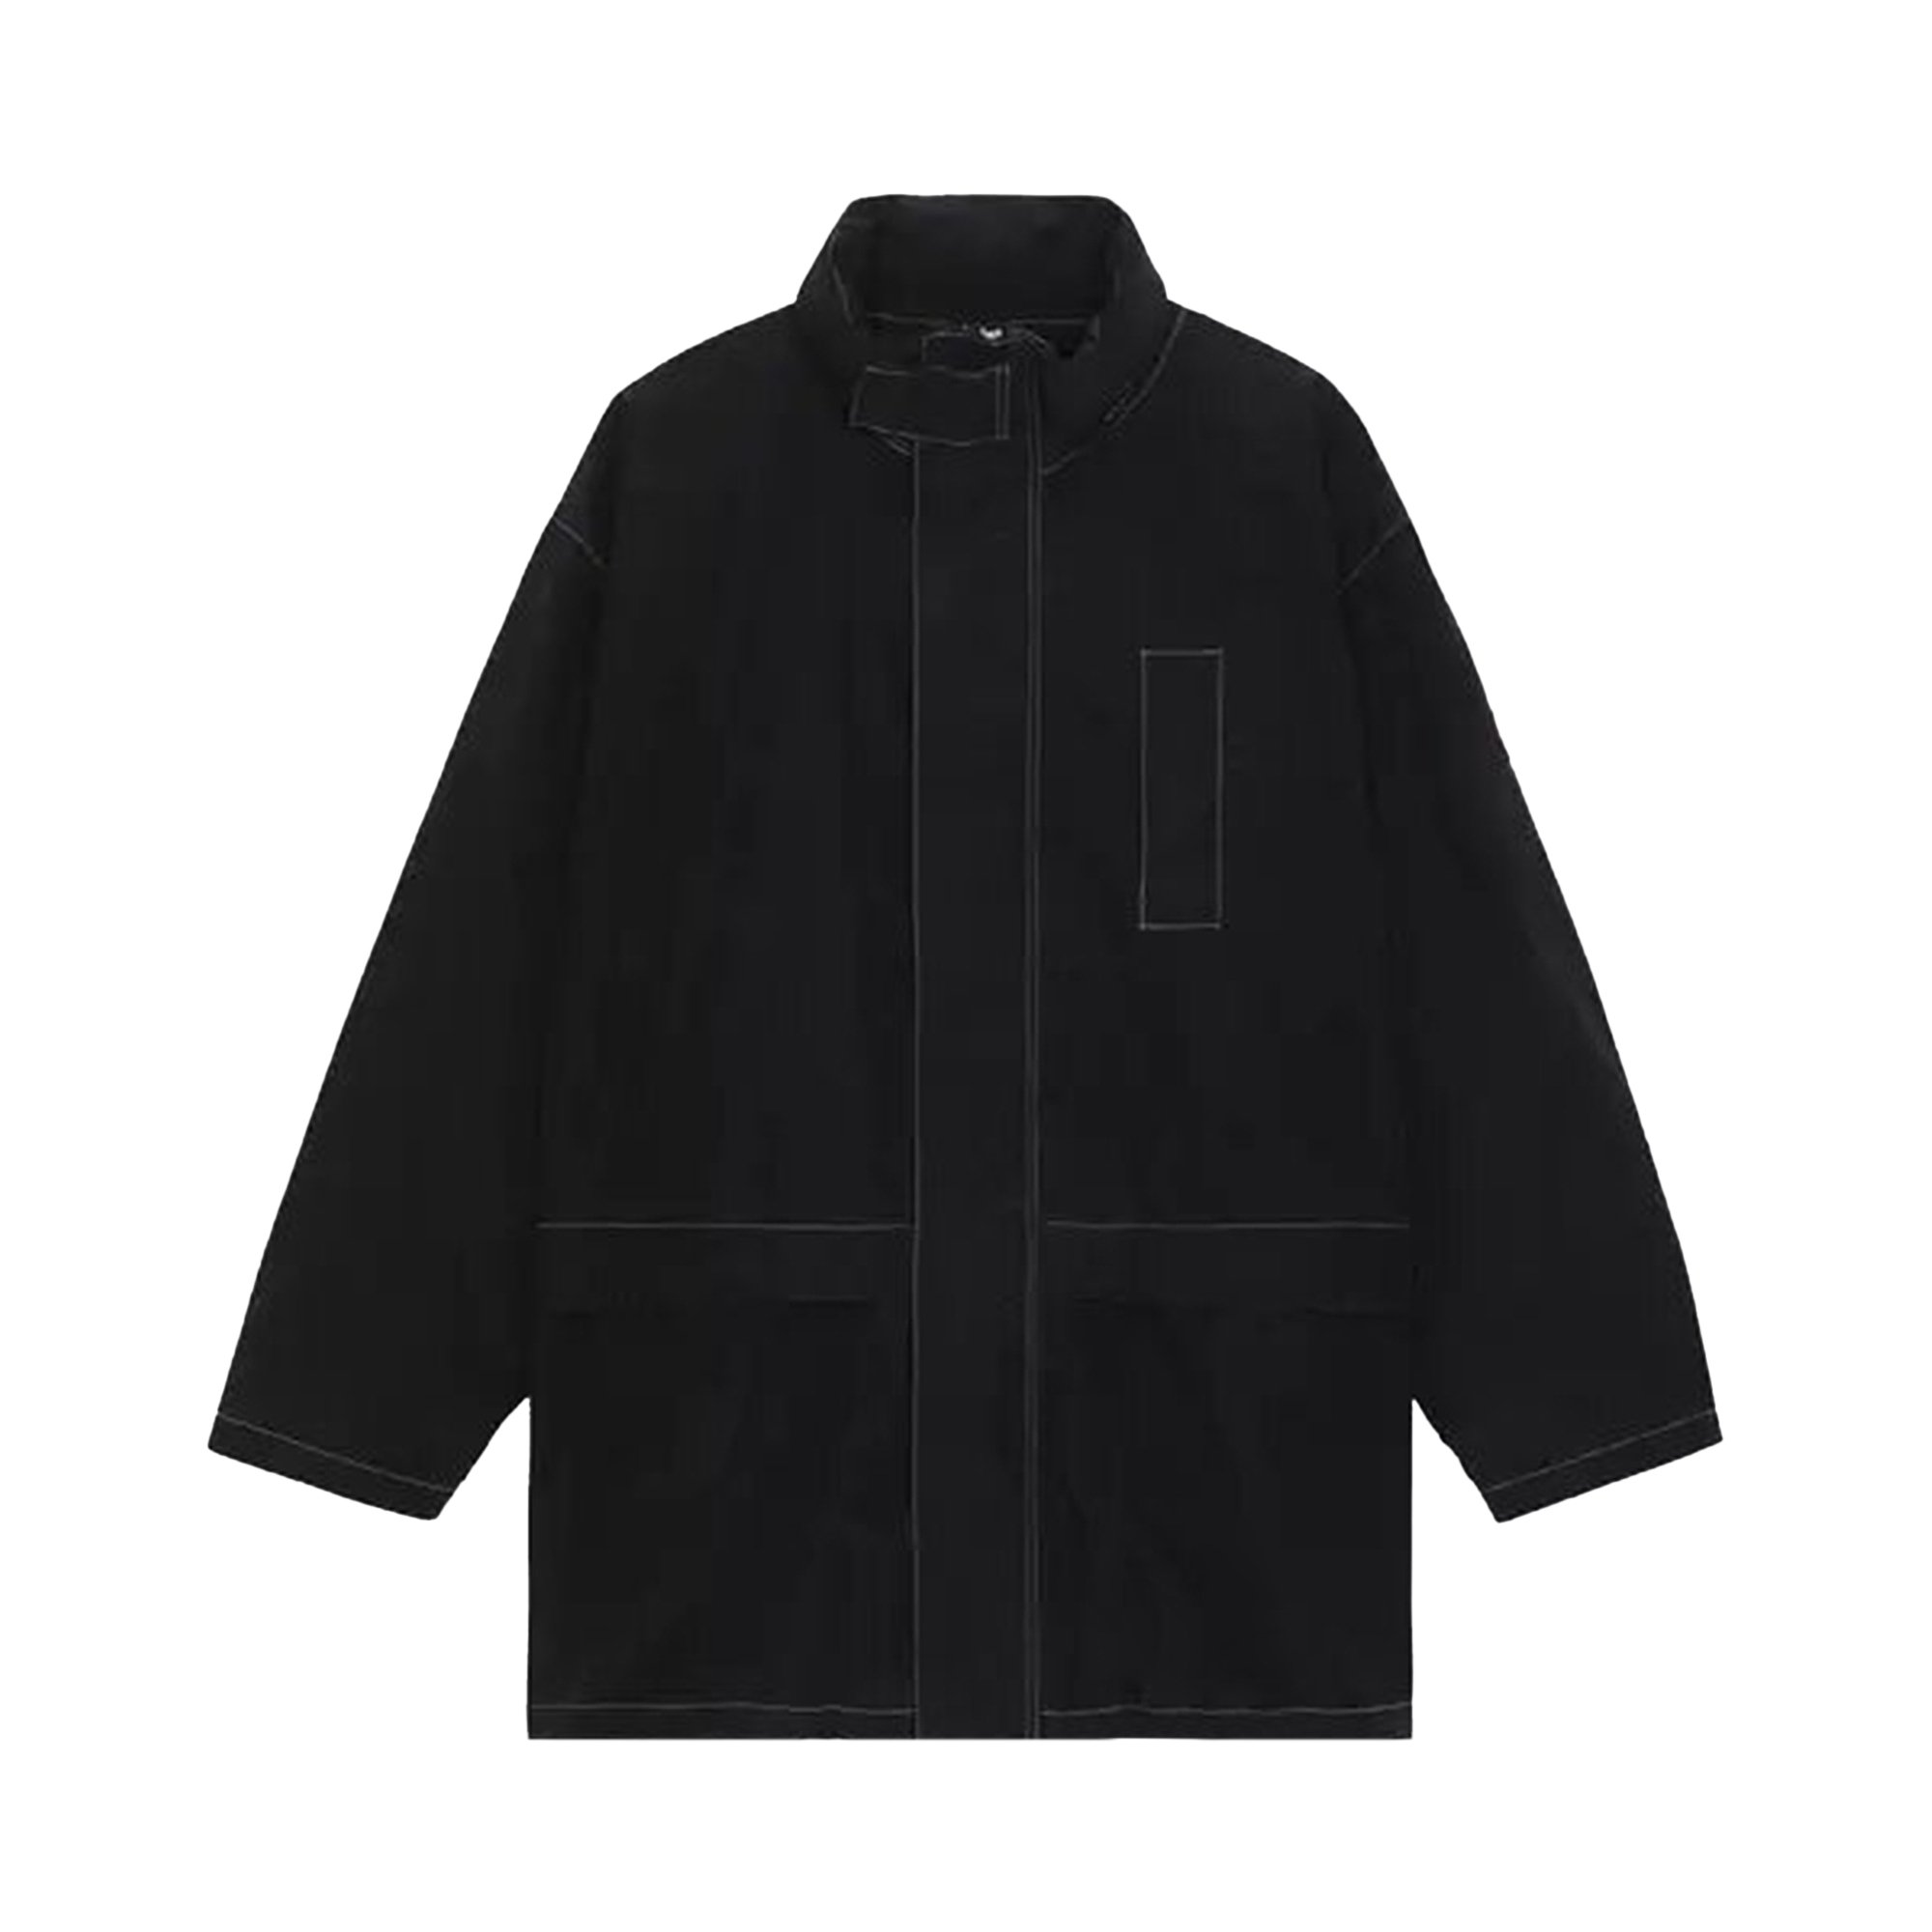 Buy Cav Empt Overdye P/N Zip Jacket 'Black' - CES22JK10 BLAC | GOAT